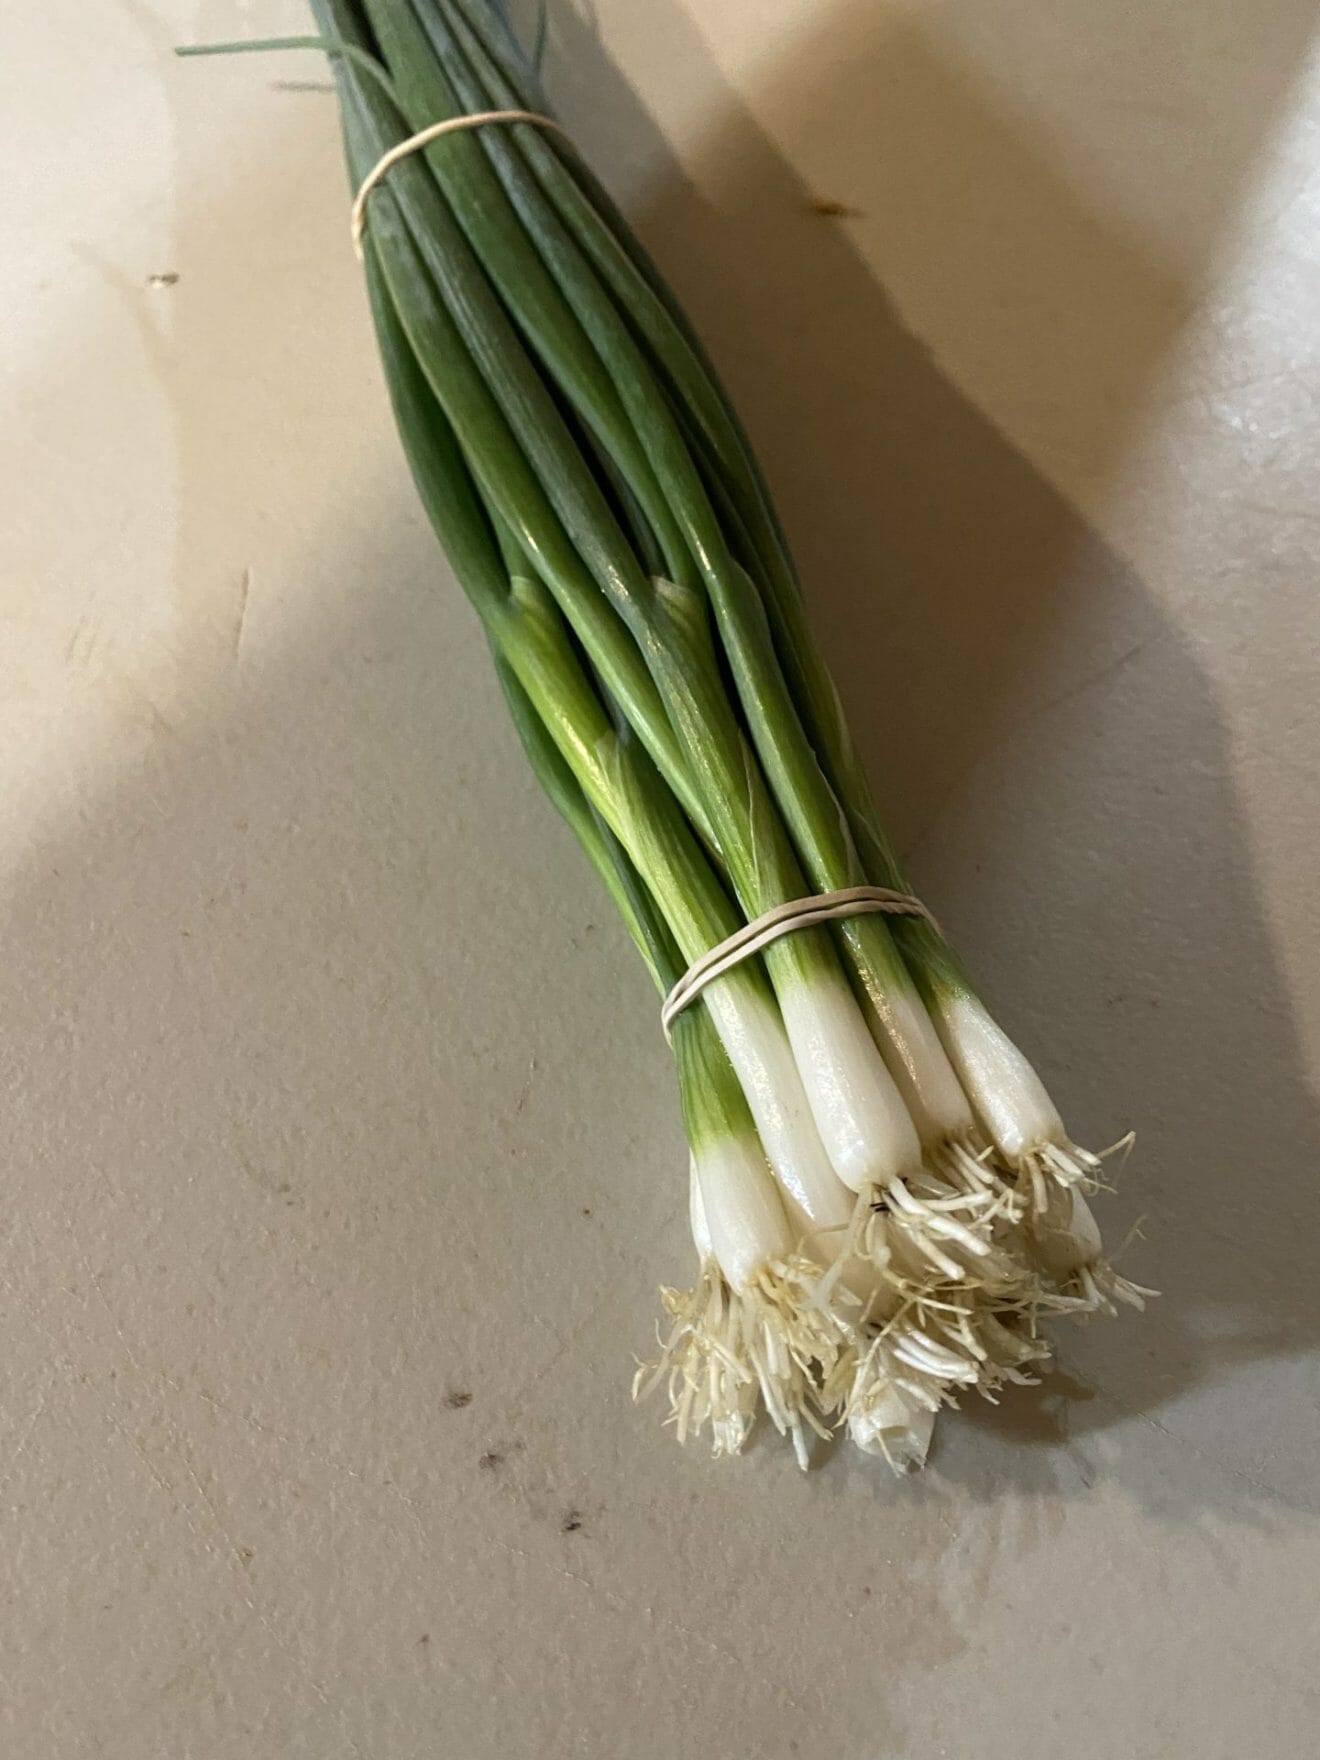 Green Onions